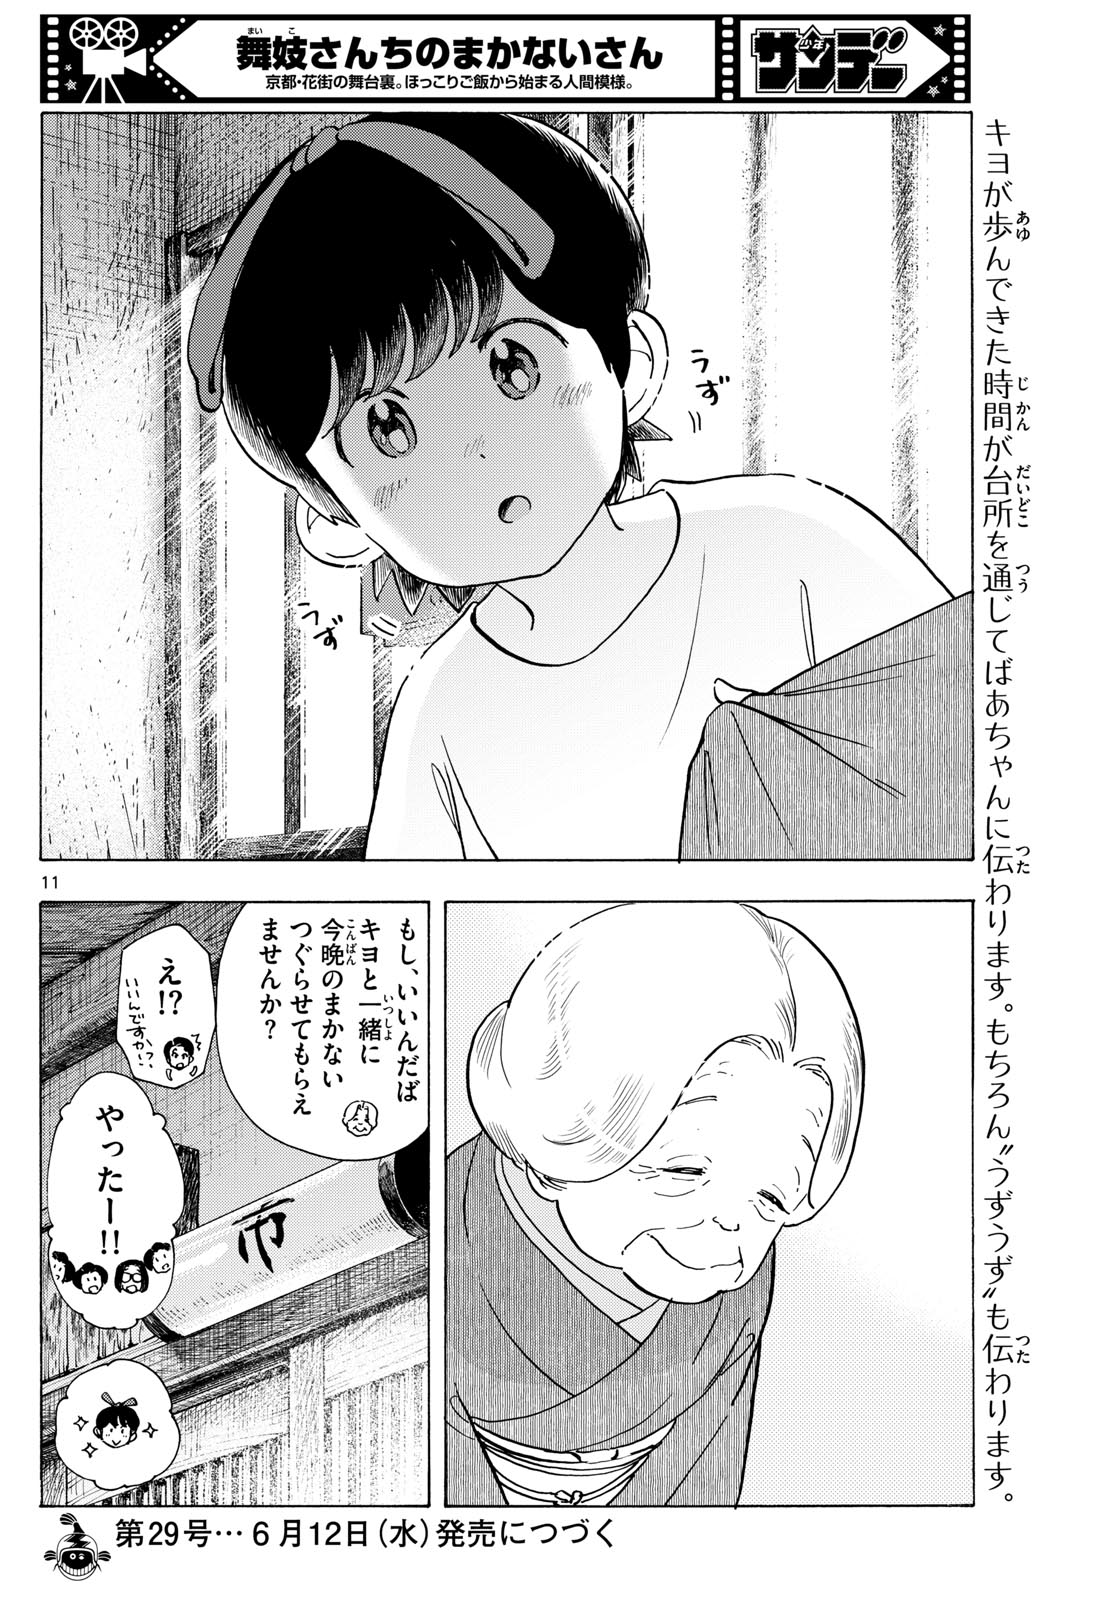 Maiko-san Chi no Makanai-san - Chapter 303 - Page 11